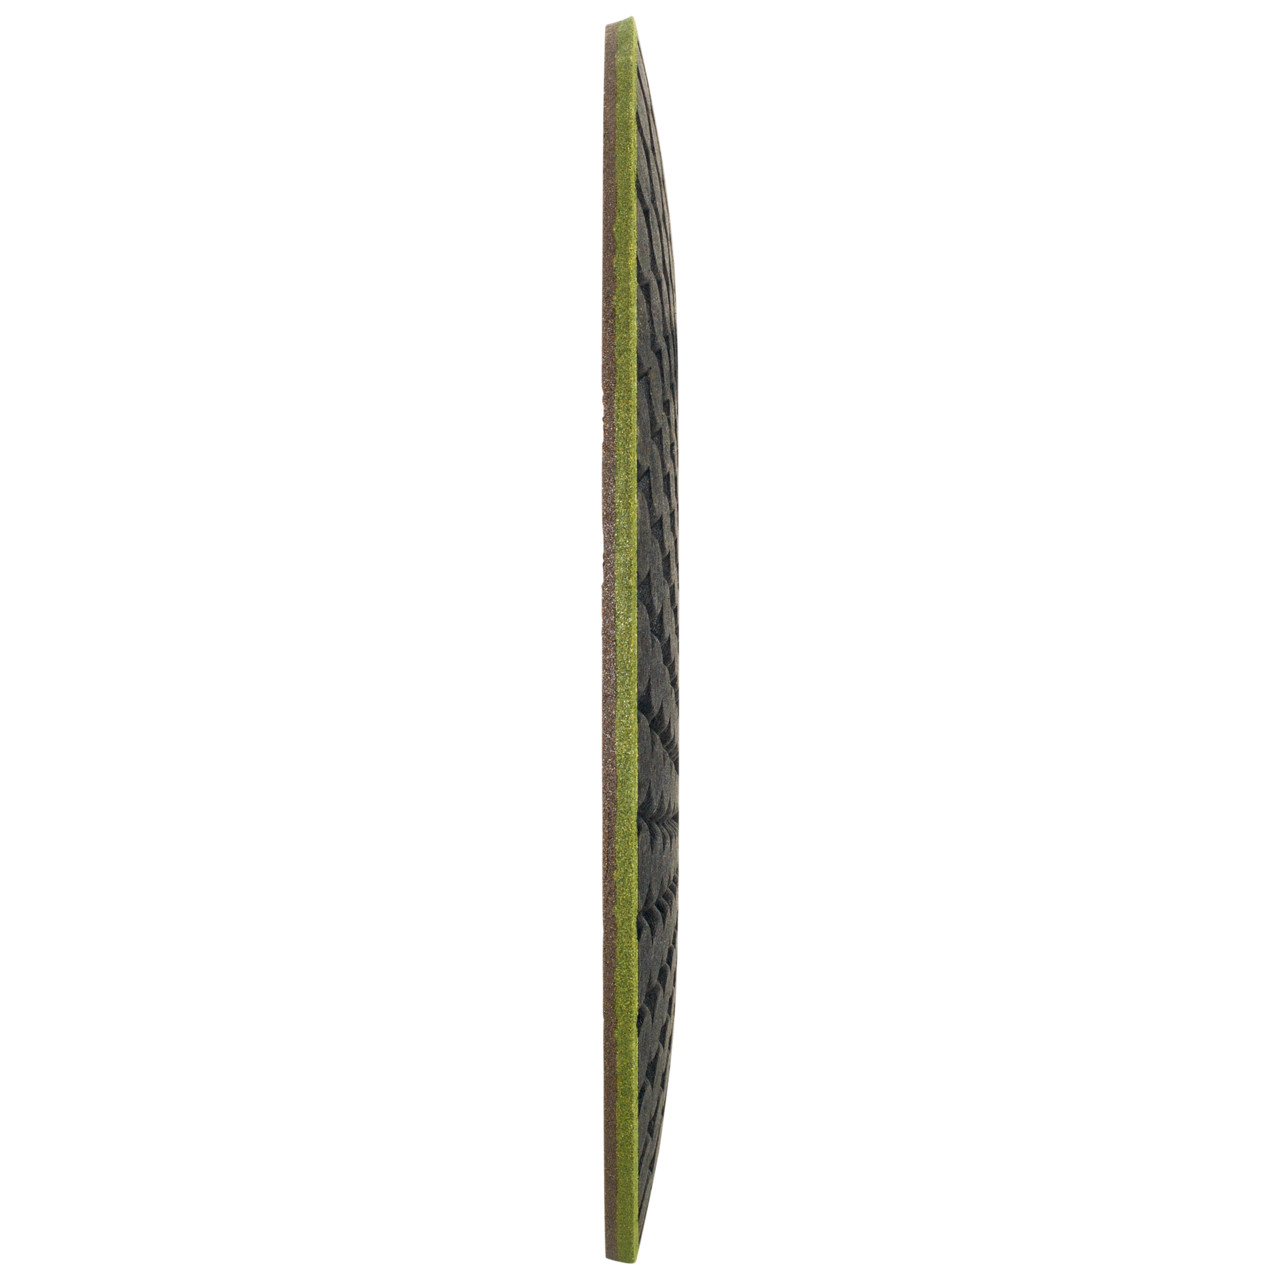 TYROLIT RONDELLER DxH 178x22.23 Para piedra, forma: 29RON (Rondeller®), Art. 908221